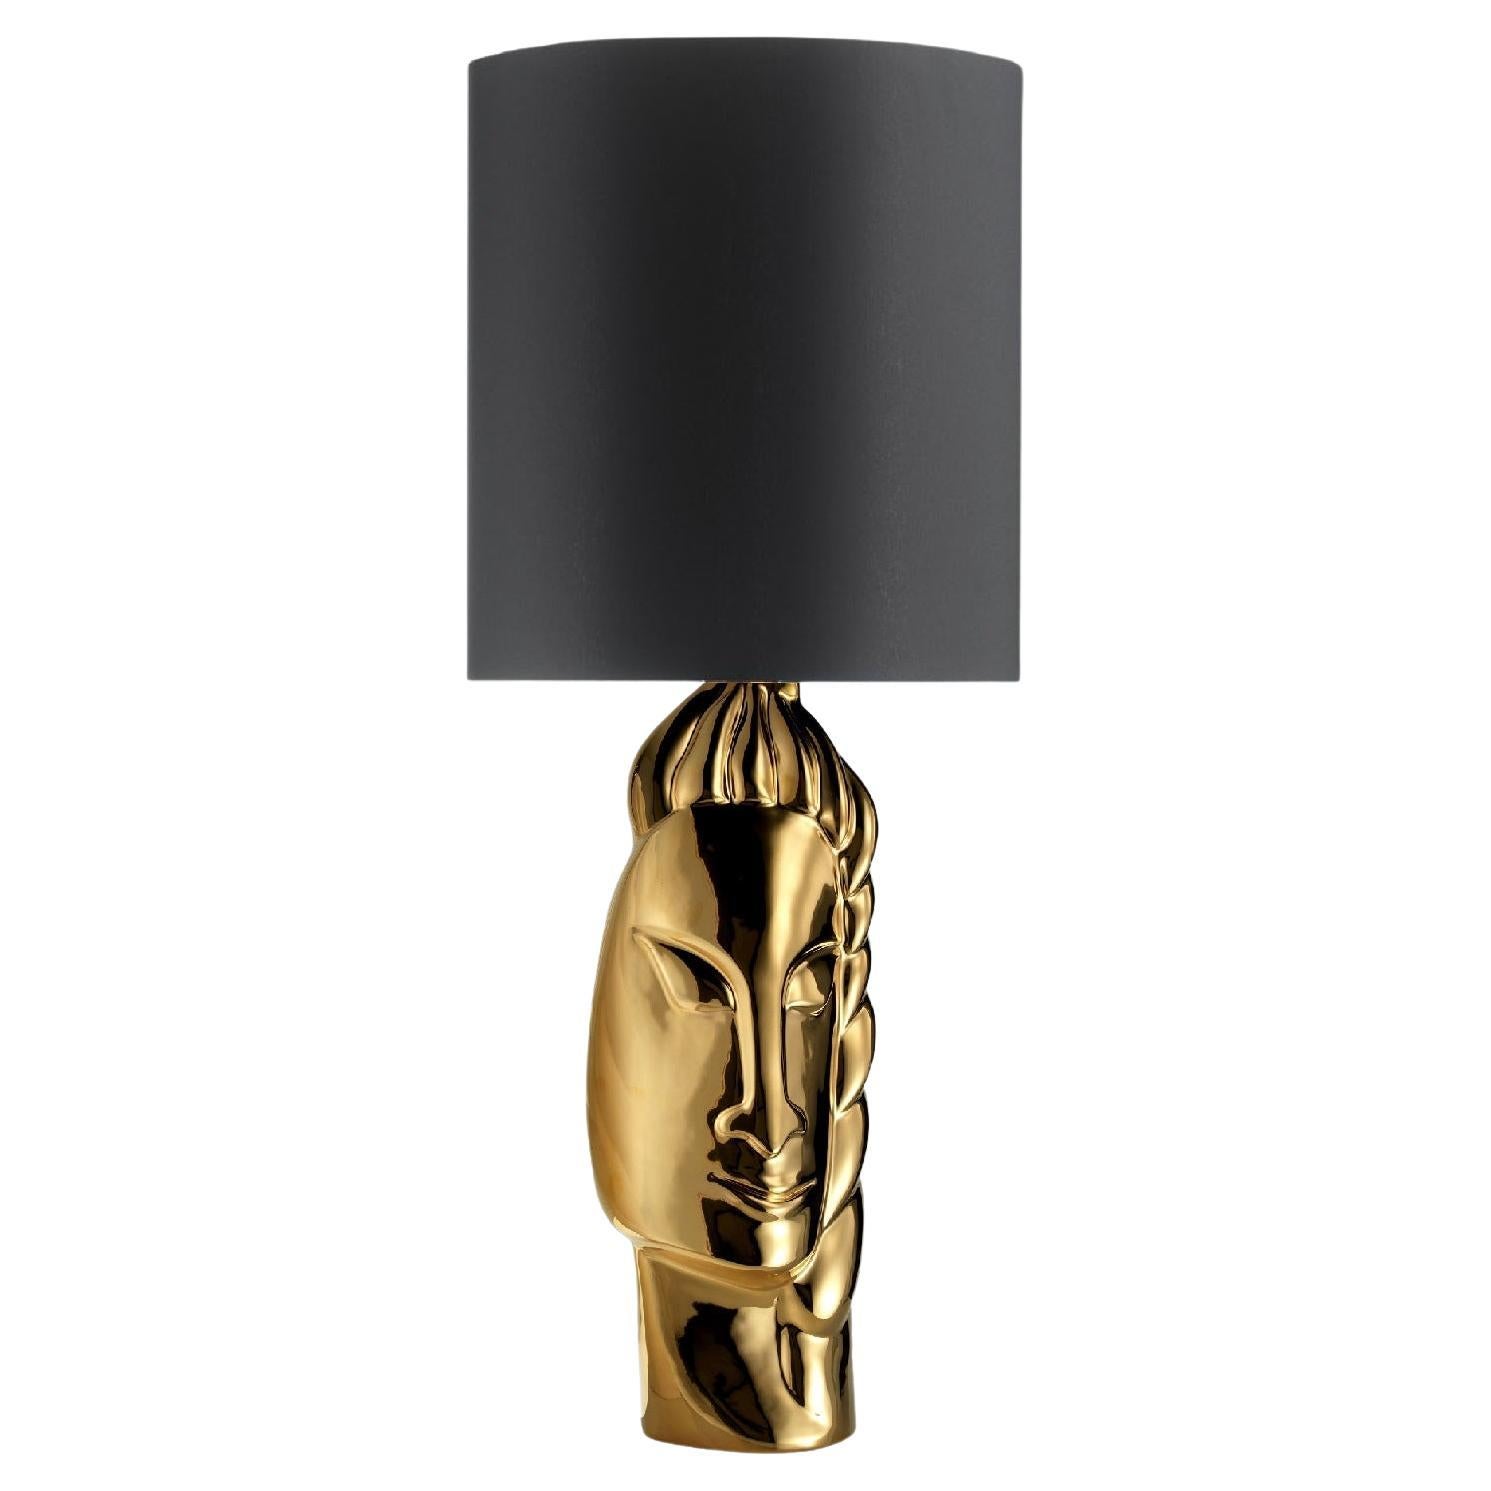 Cleta-Lampe, Keramiklampe, handgefertigt in Bronze im Angebot